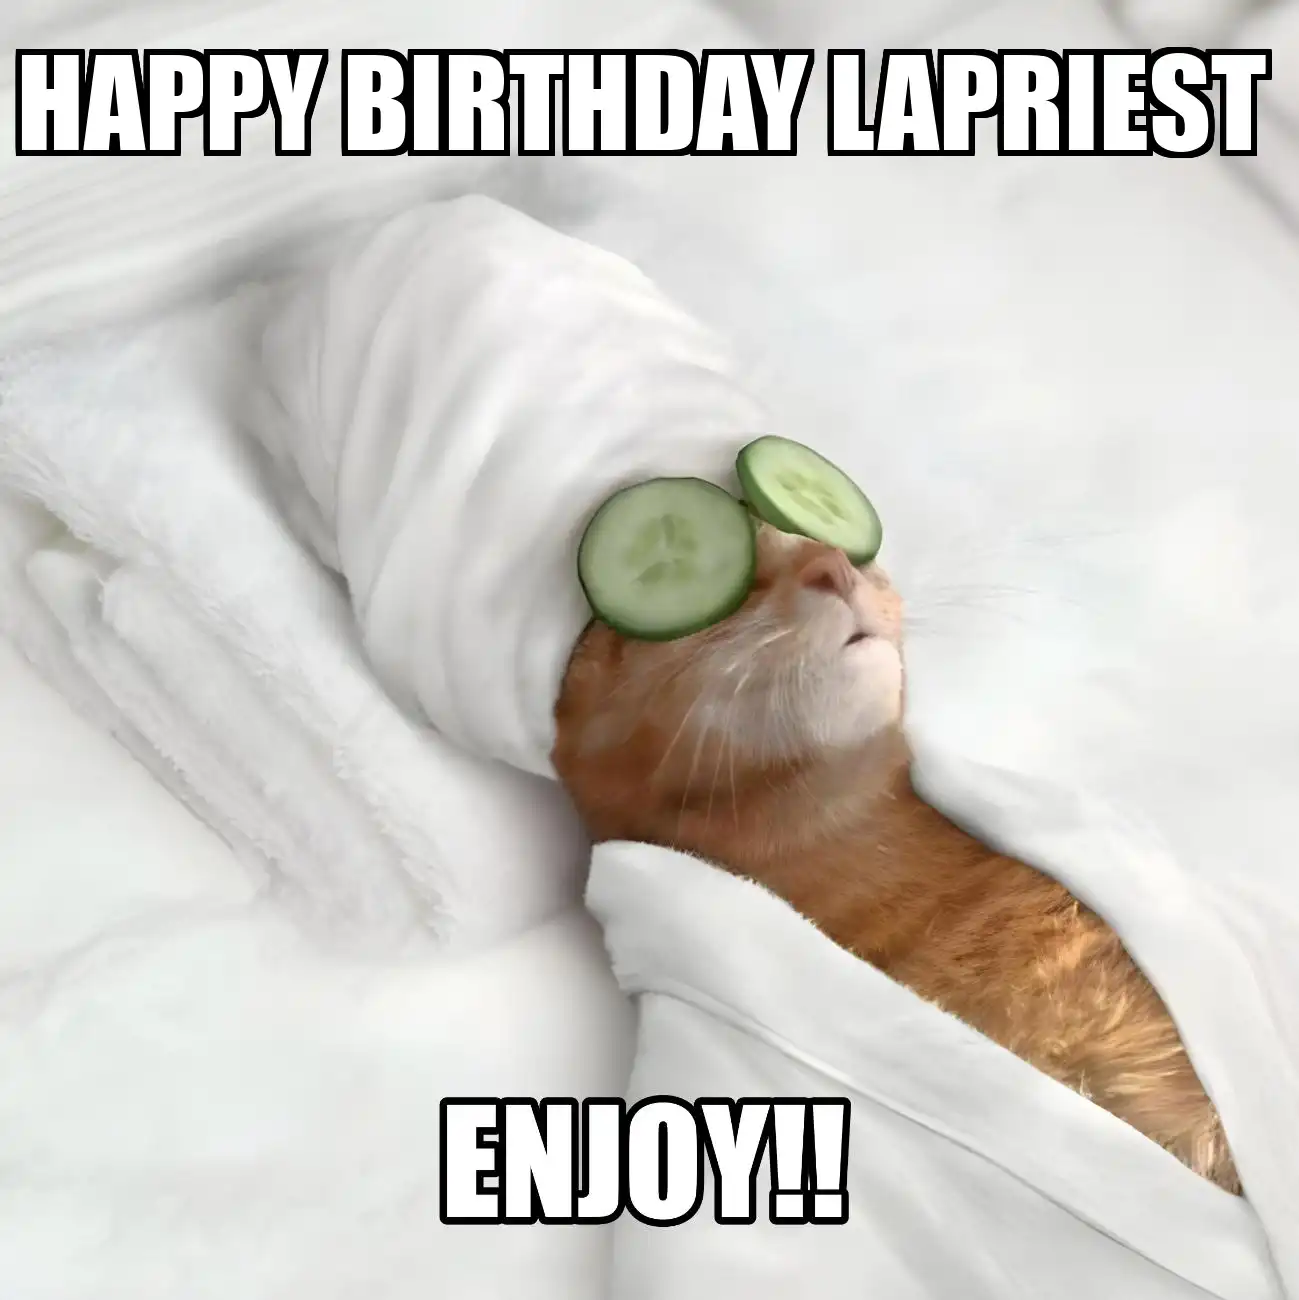 Happy Birthday Lapriest Enjoy Cat Meme